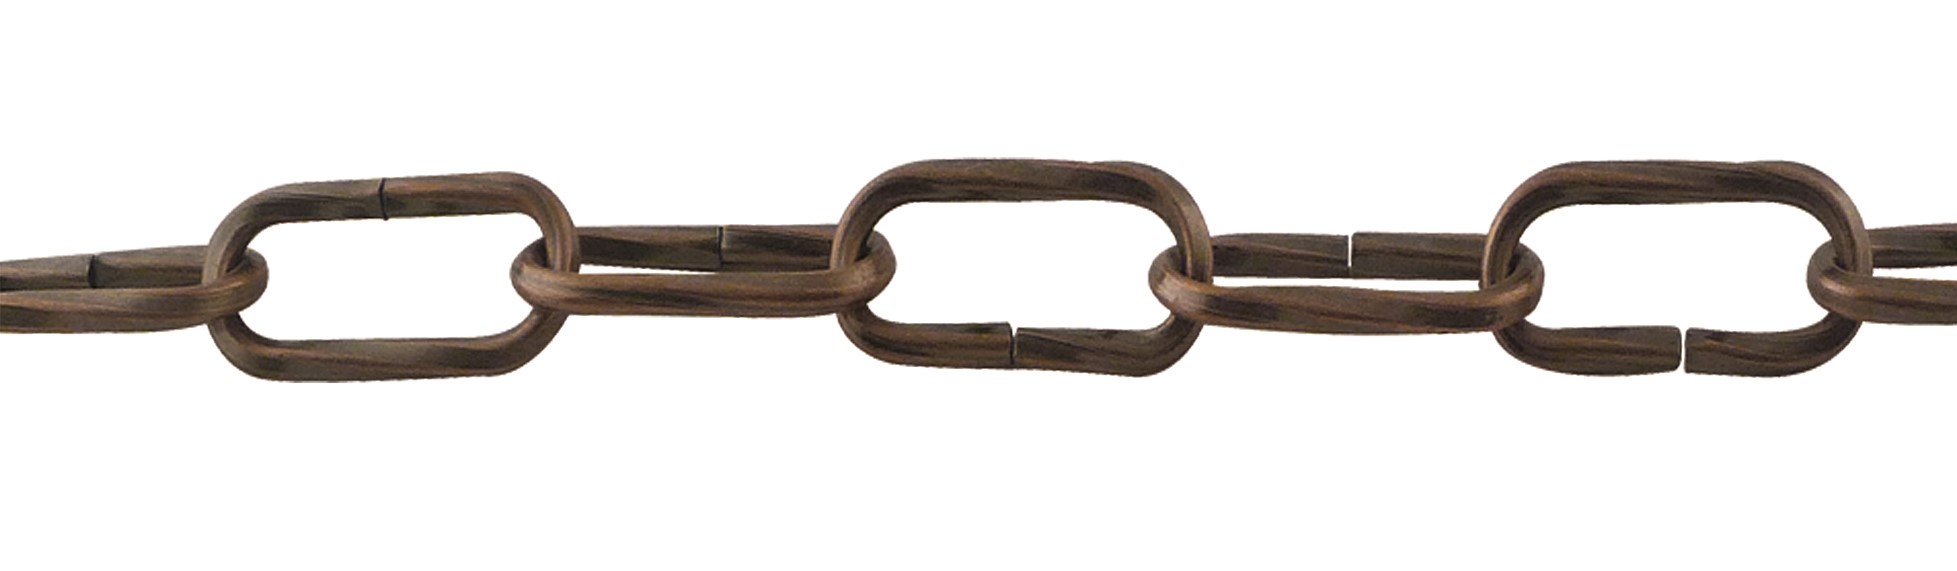 Chaine fil acier carre torsade figaro ø4mm bronze longueur :2m - 